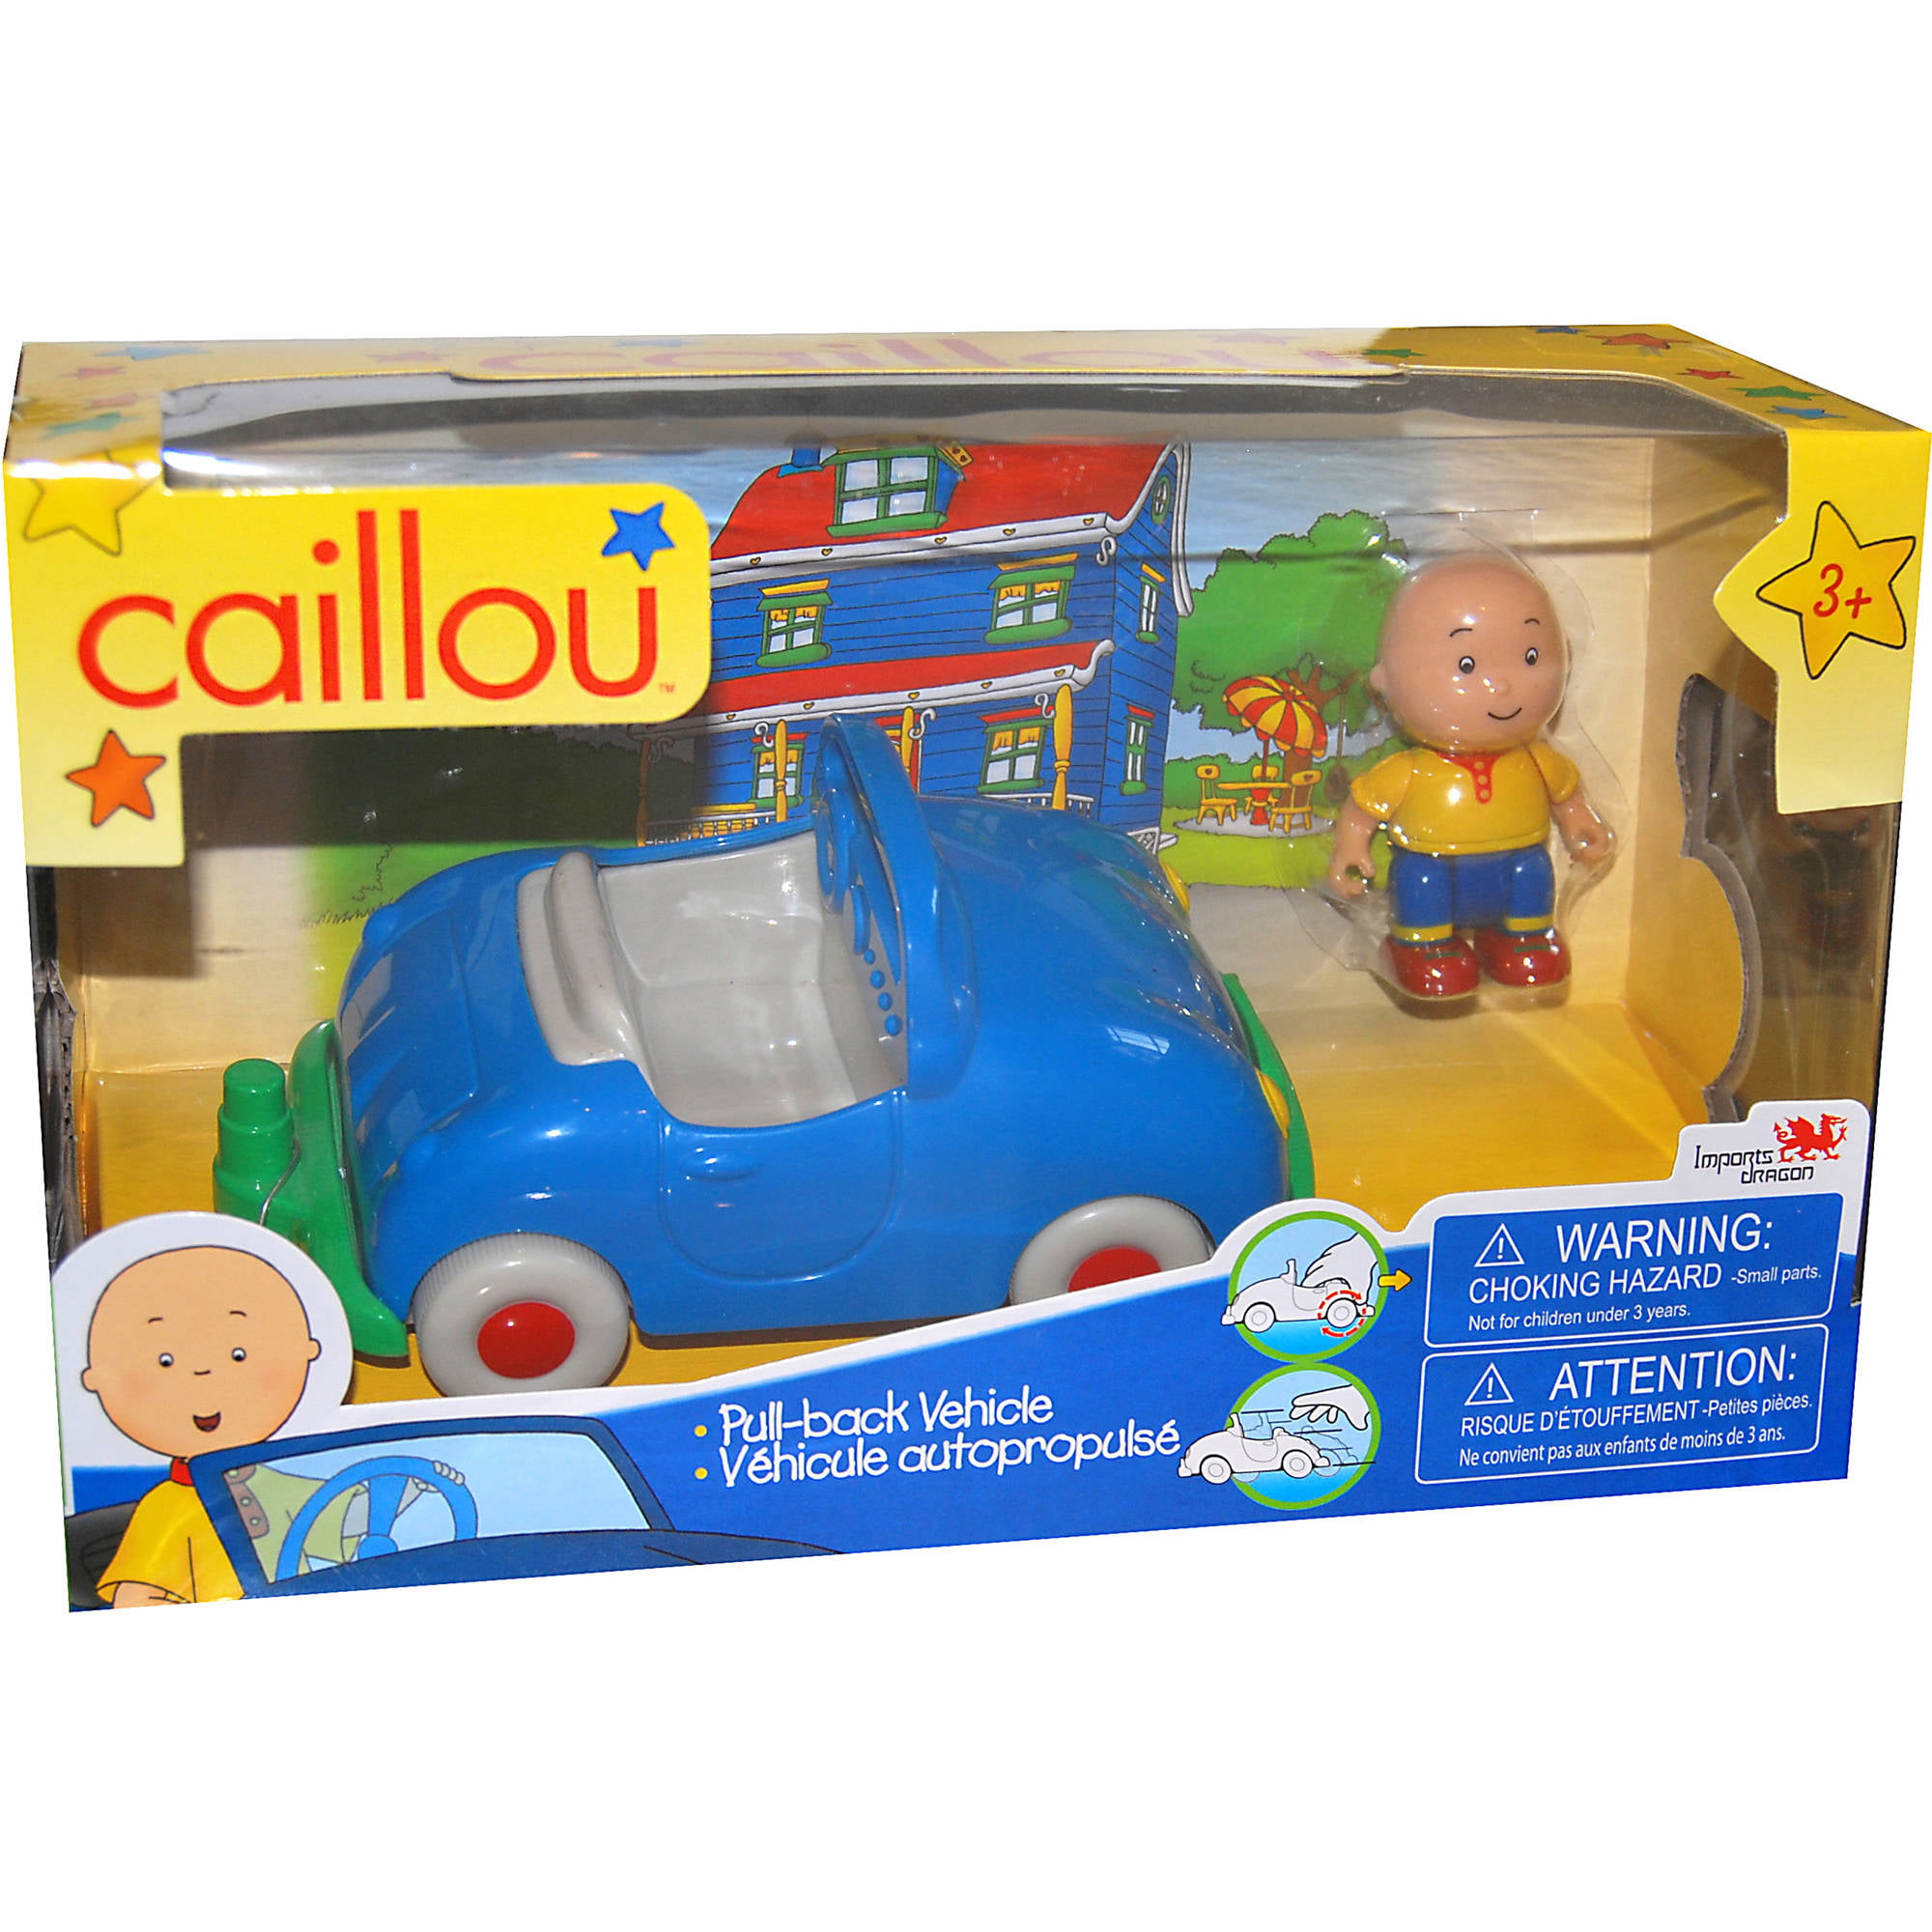 Imports - Caillou Vehicle, Blue C - Walmart.com